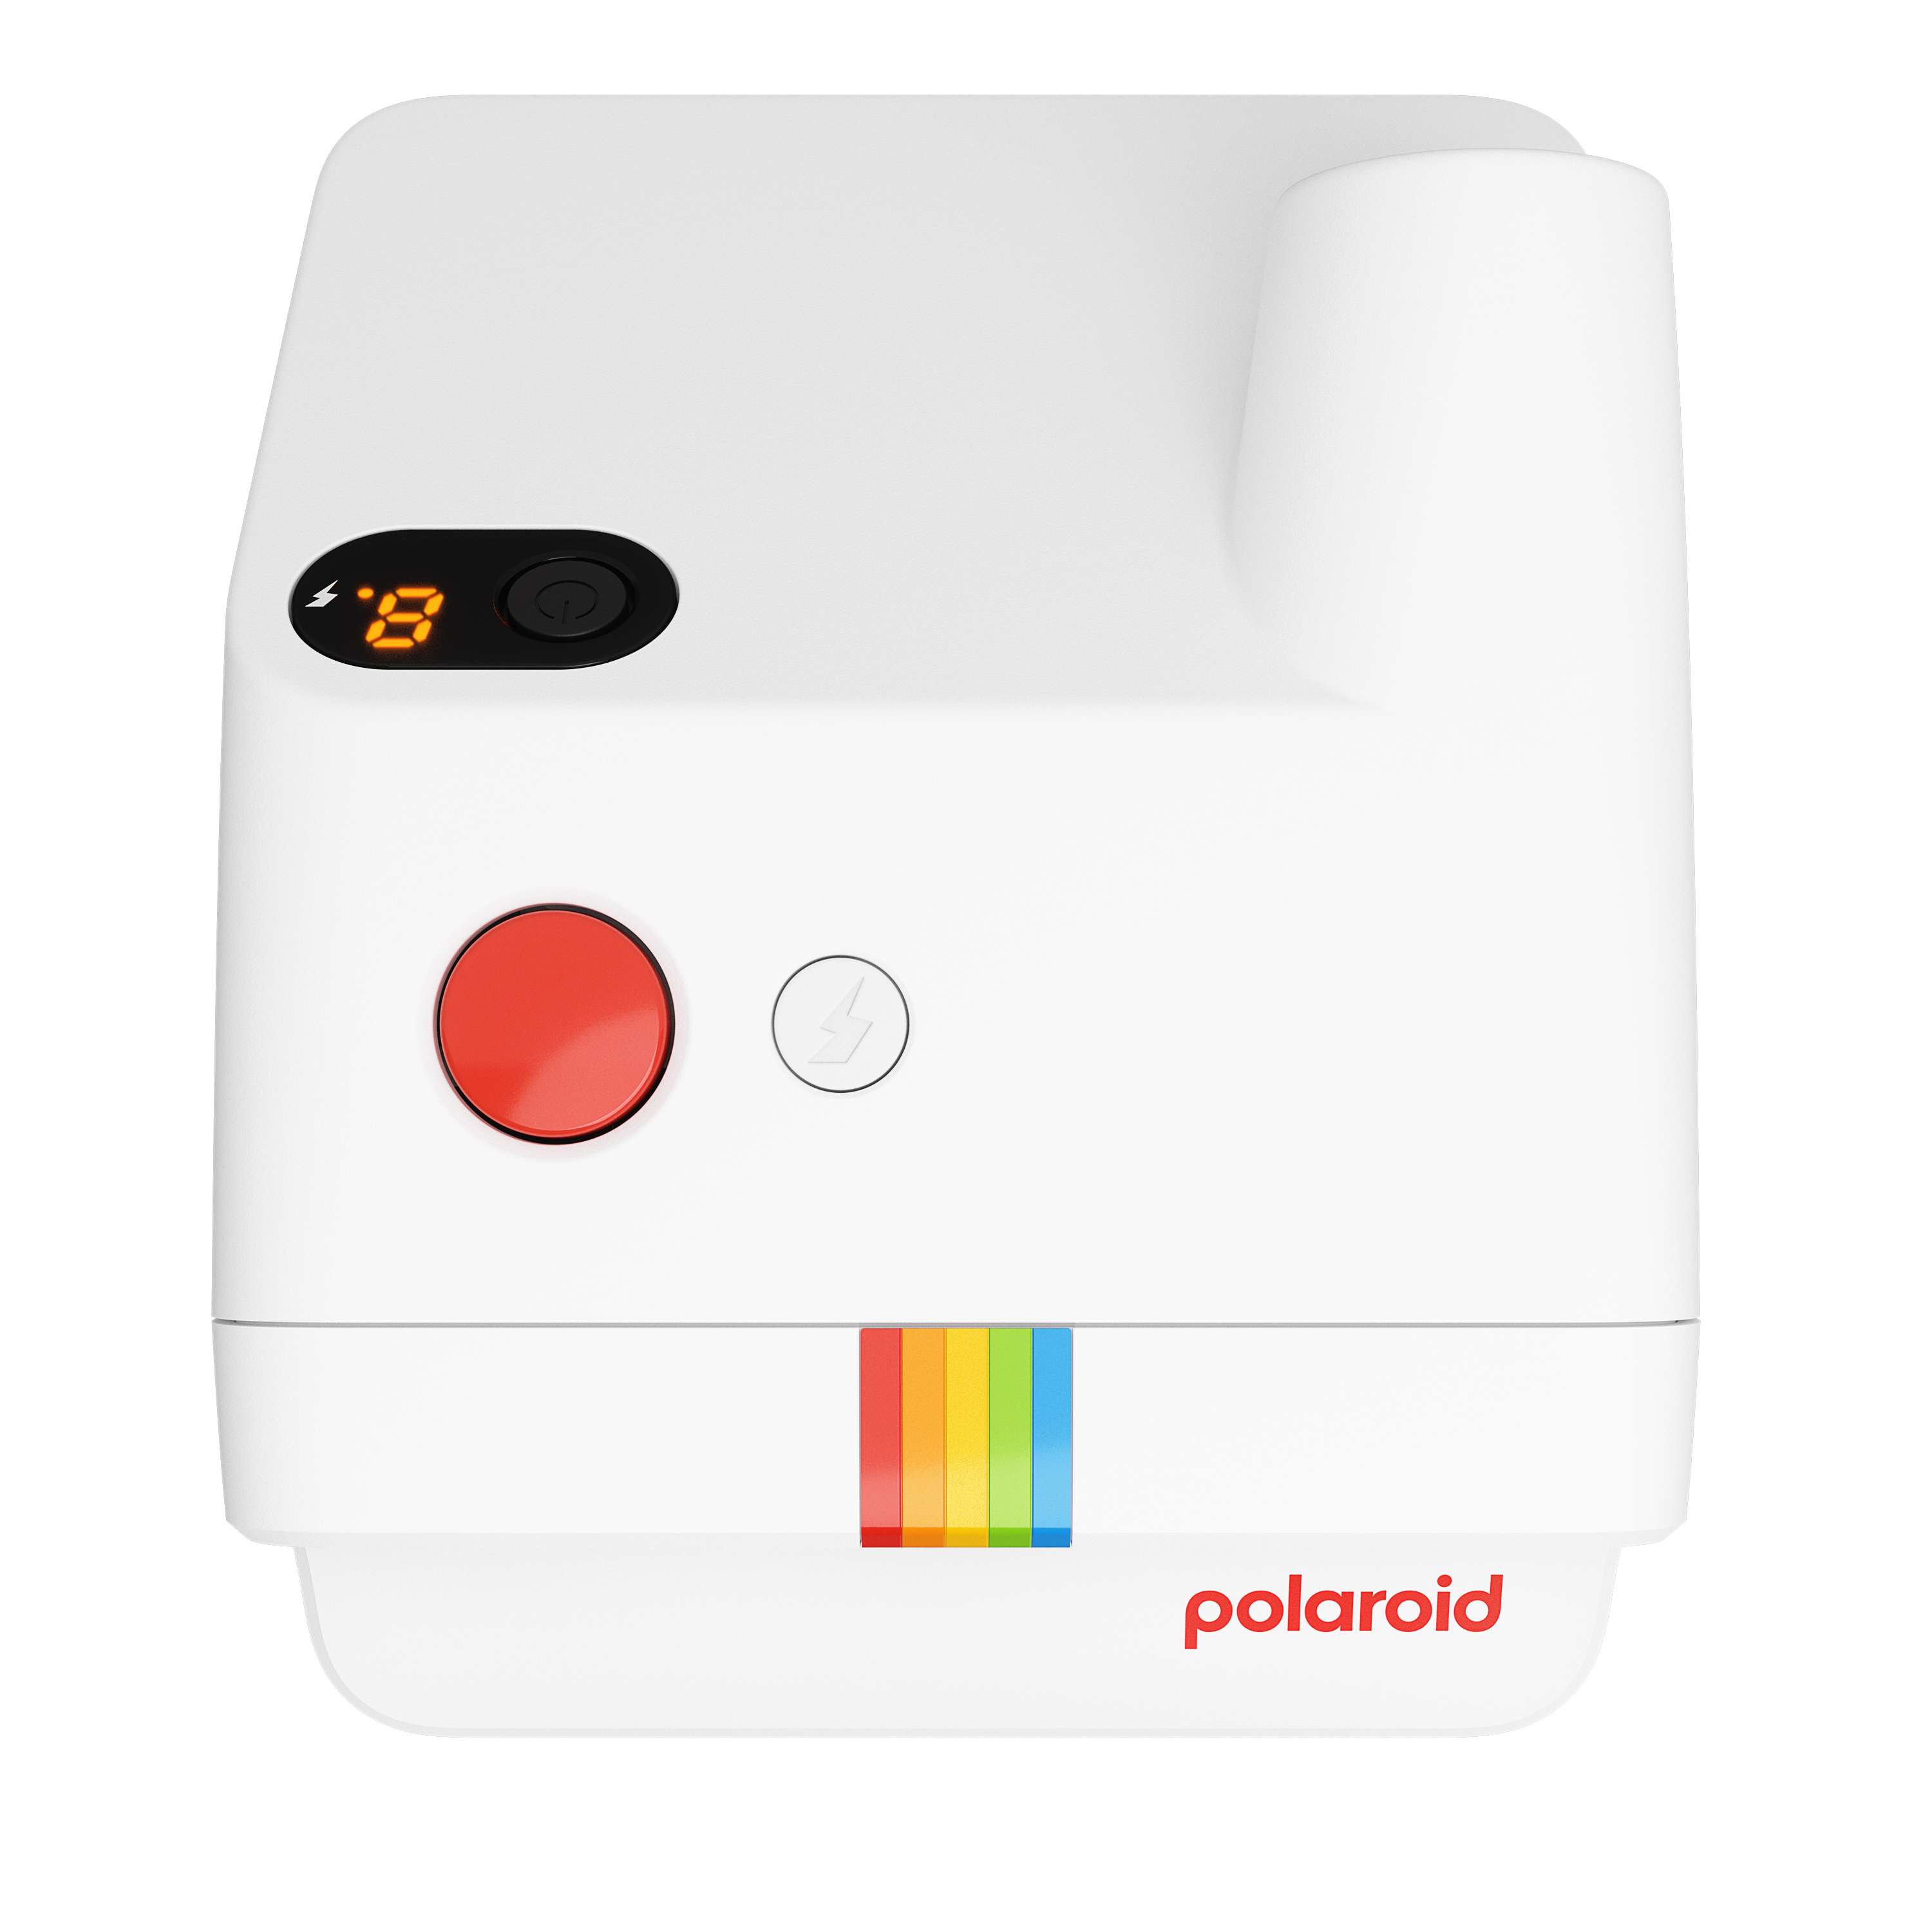 Polaroid Go Instant Camera Generation 2 - White - image 5 of 8